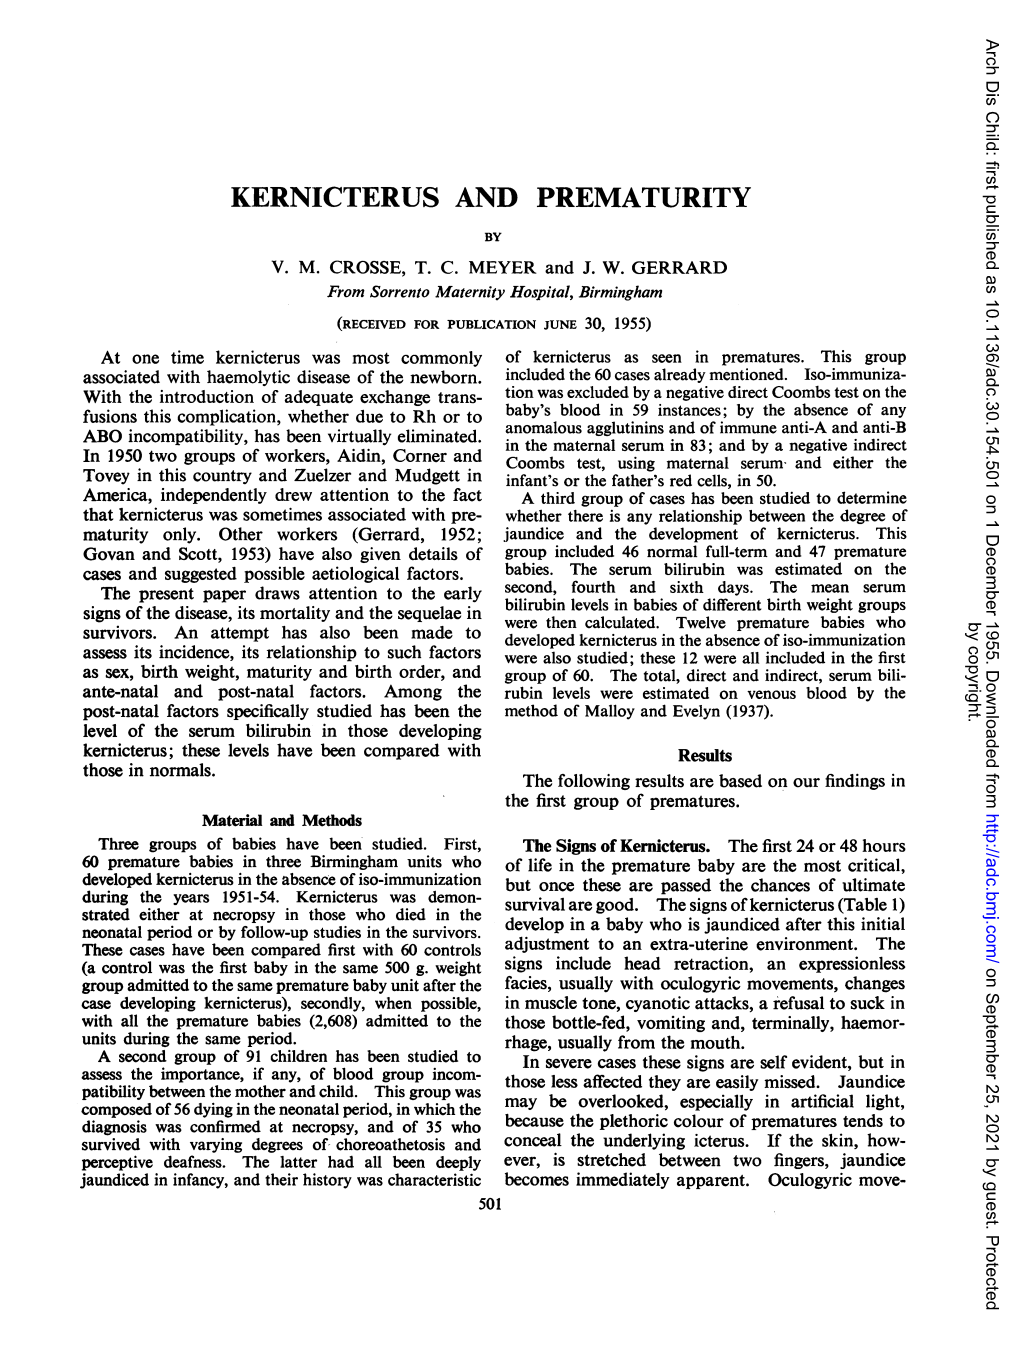 Kernicterus and Prematurity